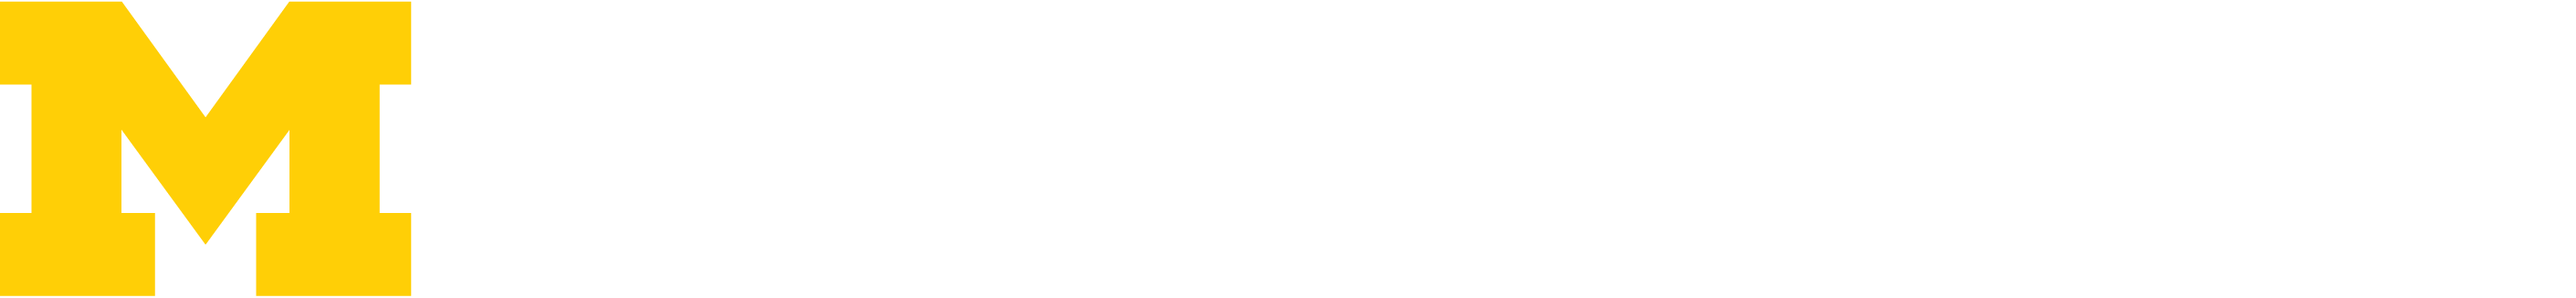 school of information center for social media responsibility university of michigan